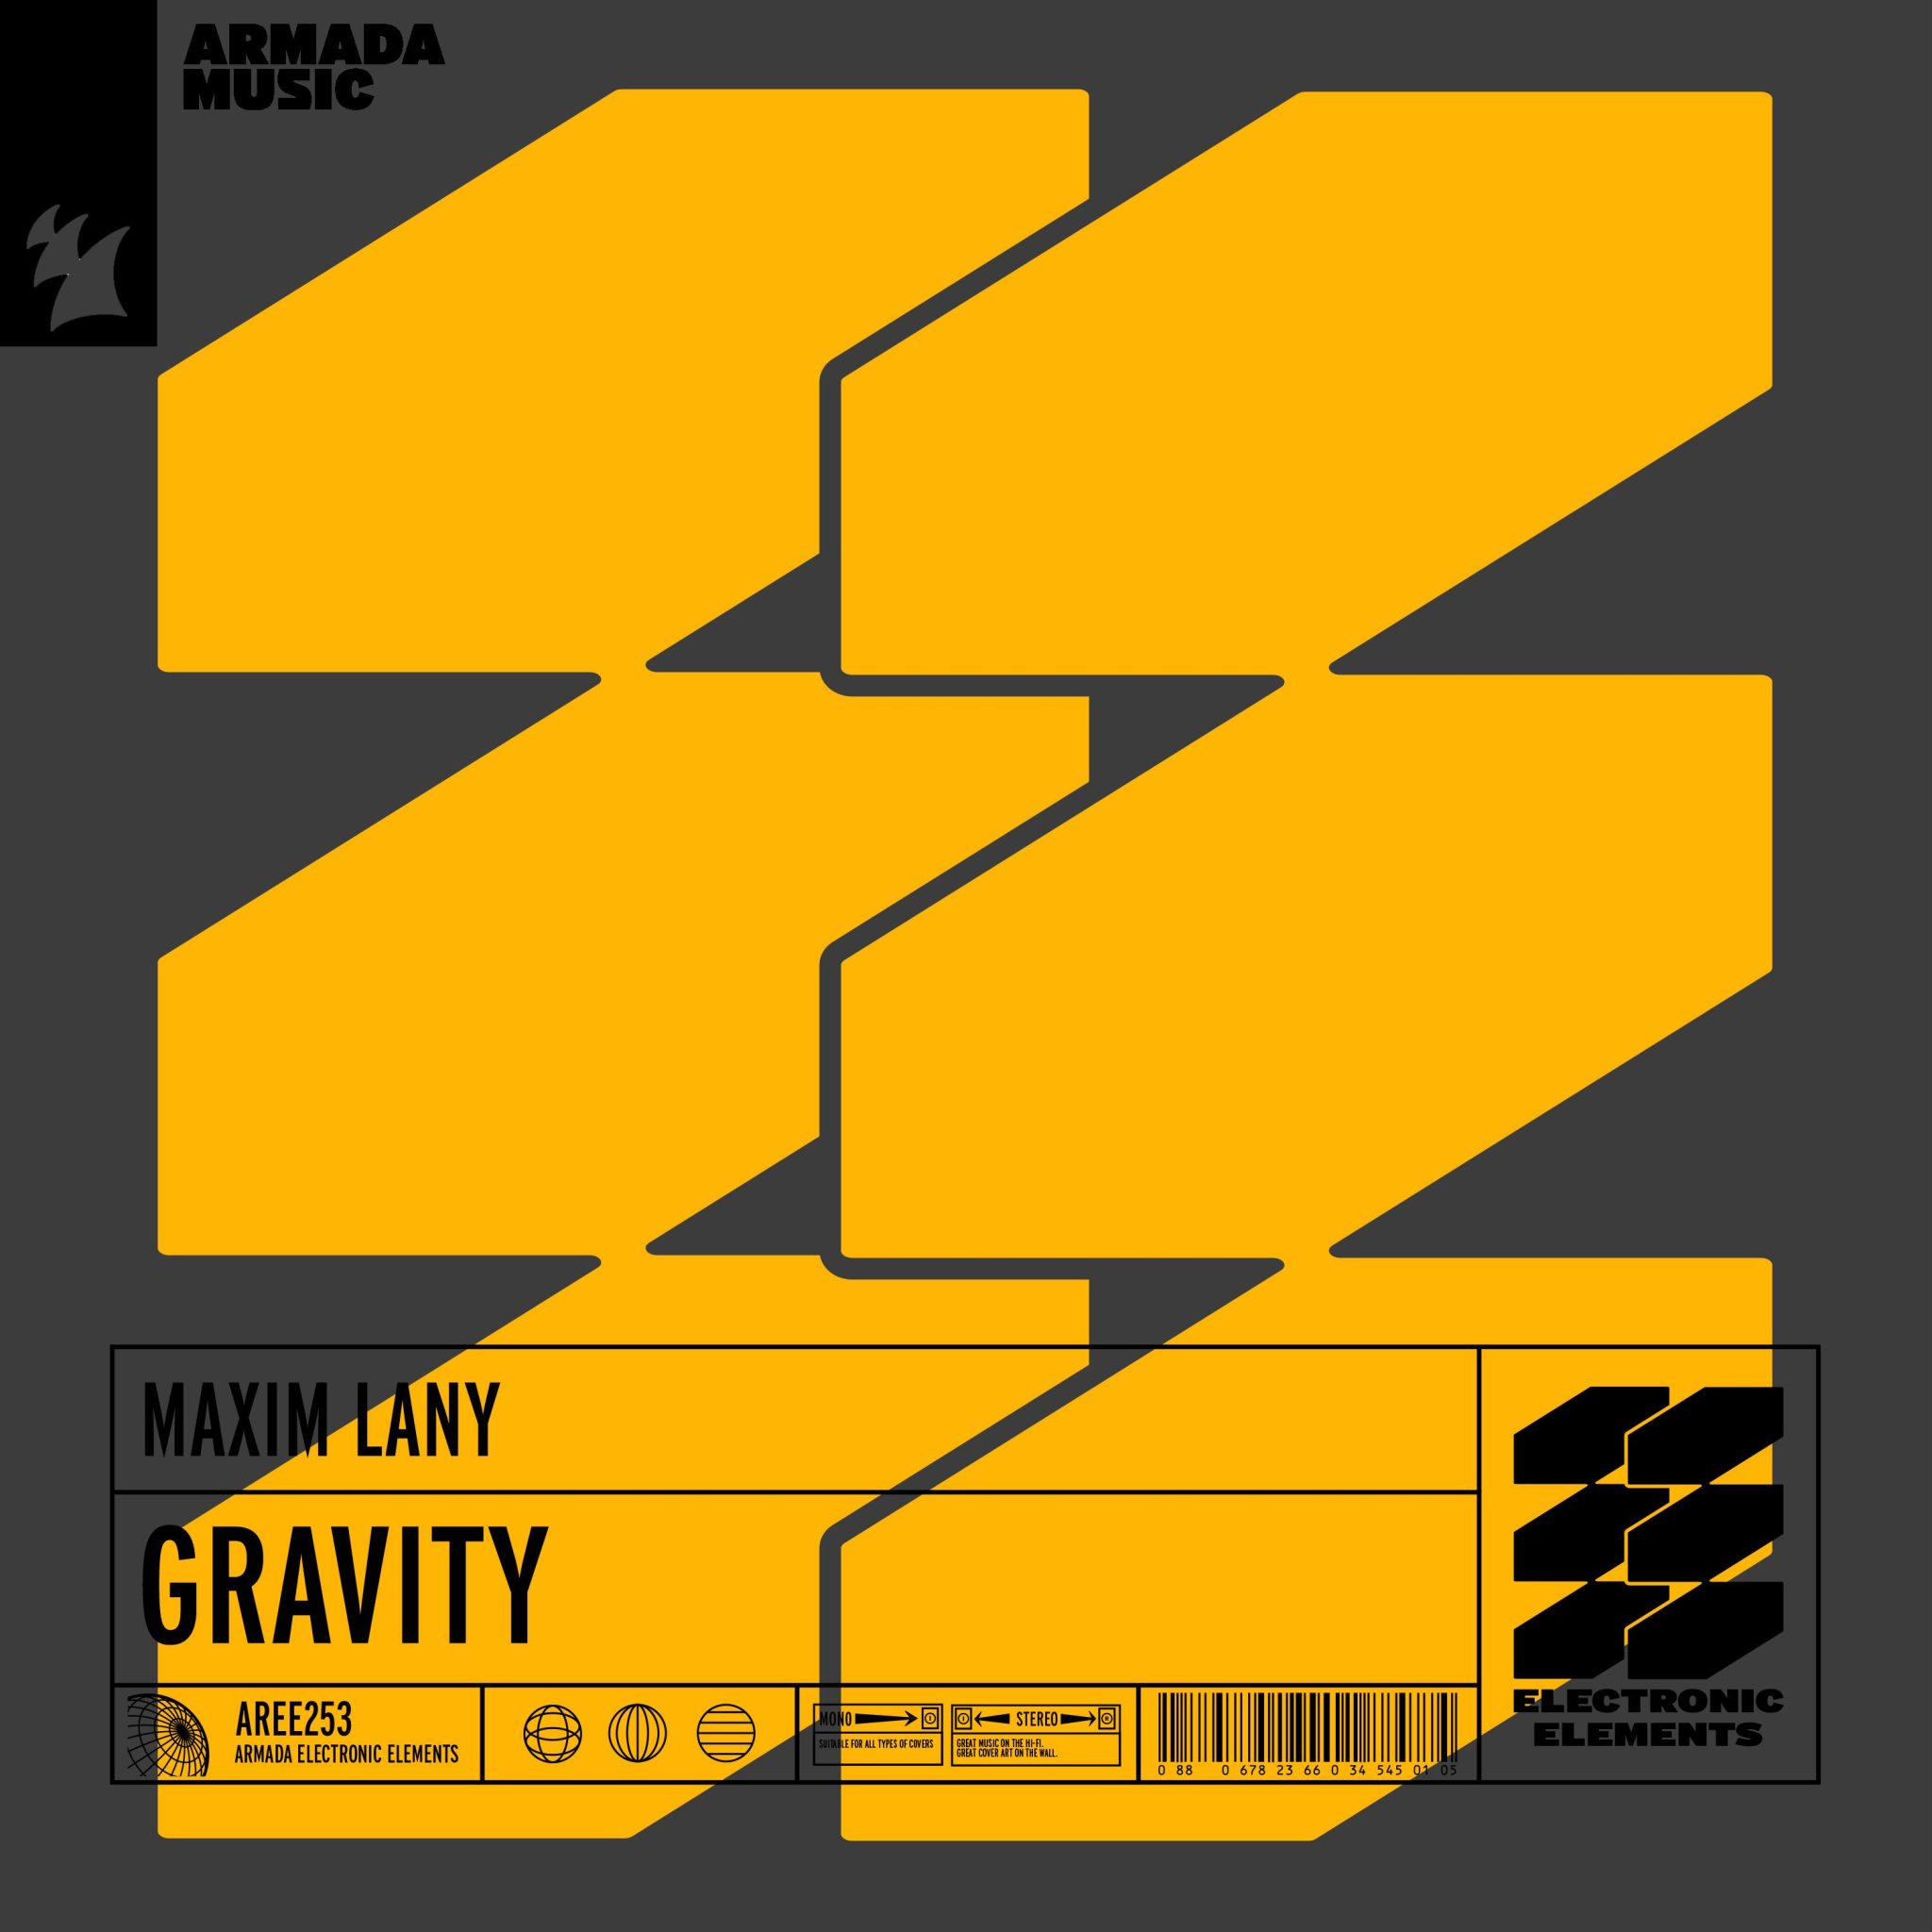 Maxim Lany Releases 'Gravity' on Armada - EDMTunes